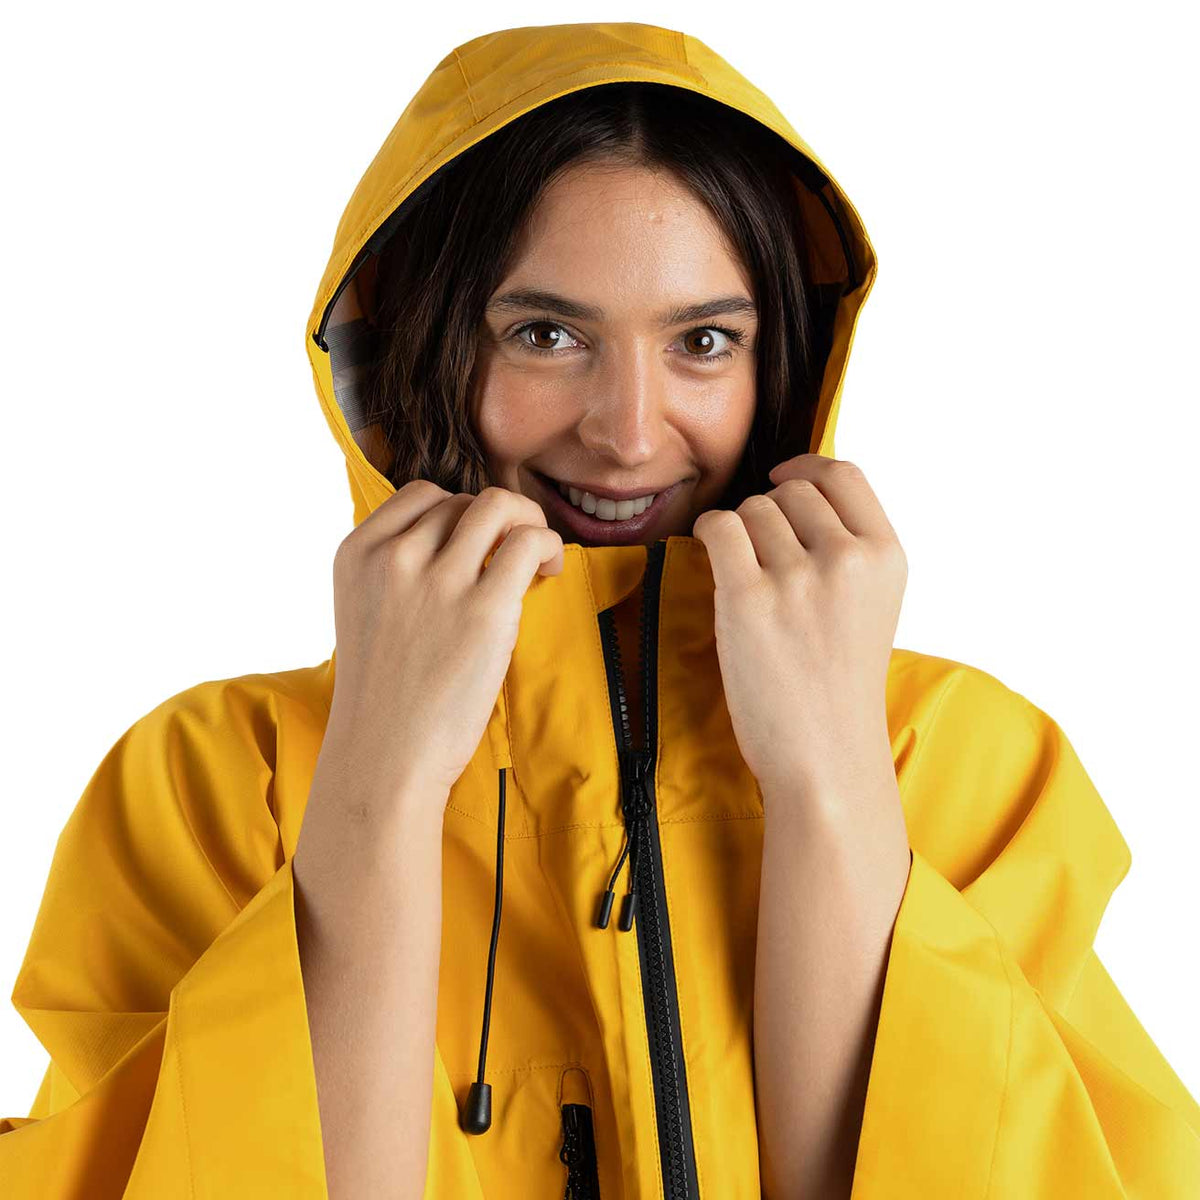 Dryrobe Waterproof Poncho - Yellow - Changing Robe Poncho Towel by Dryrobe One Size